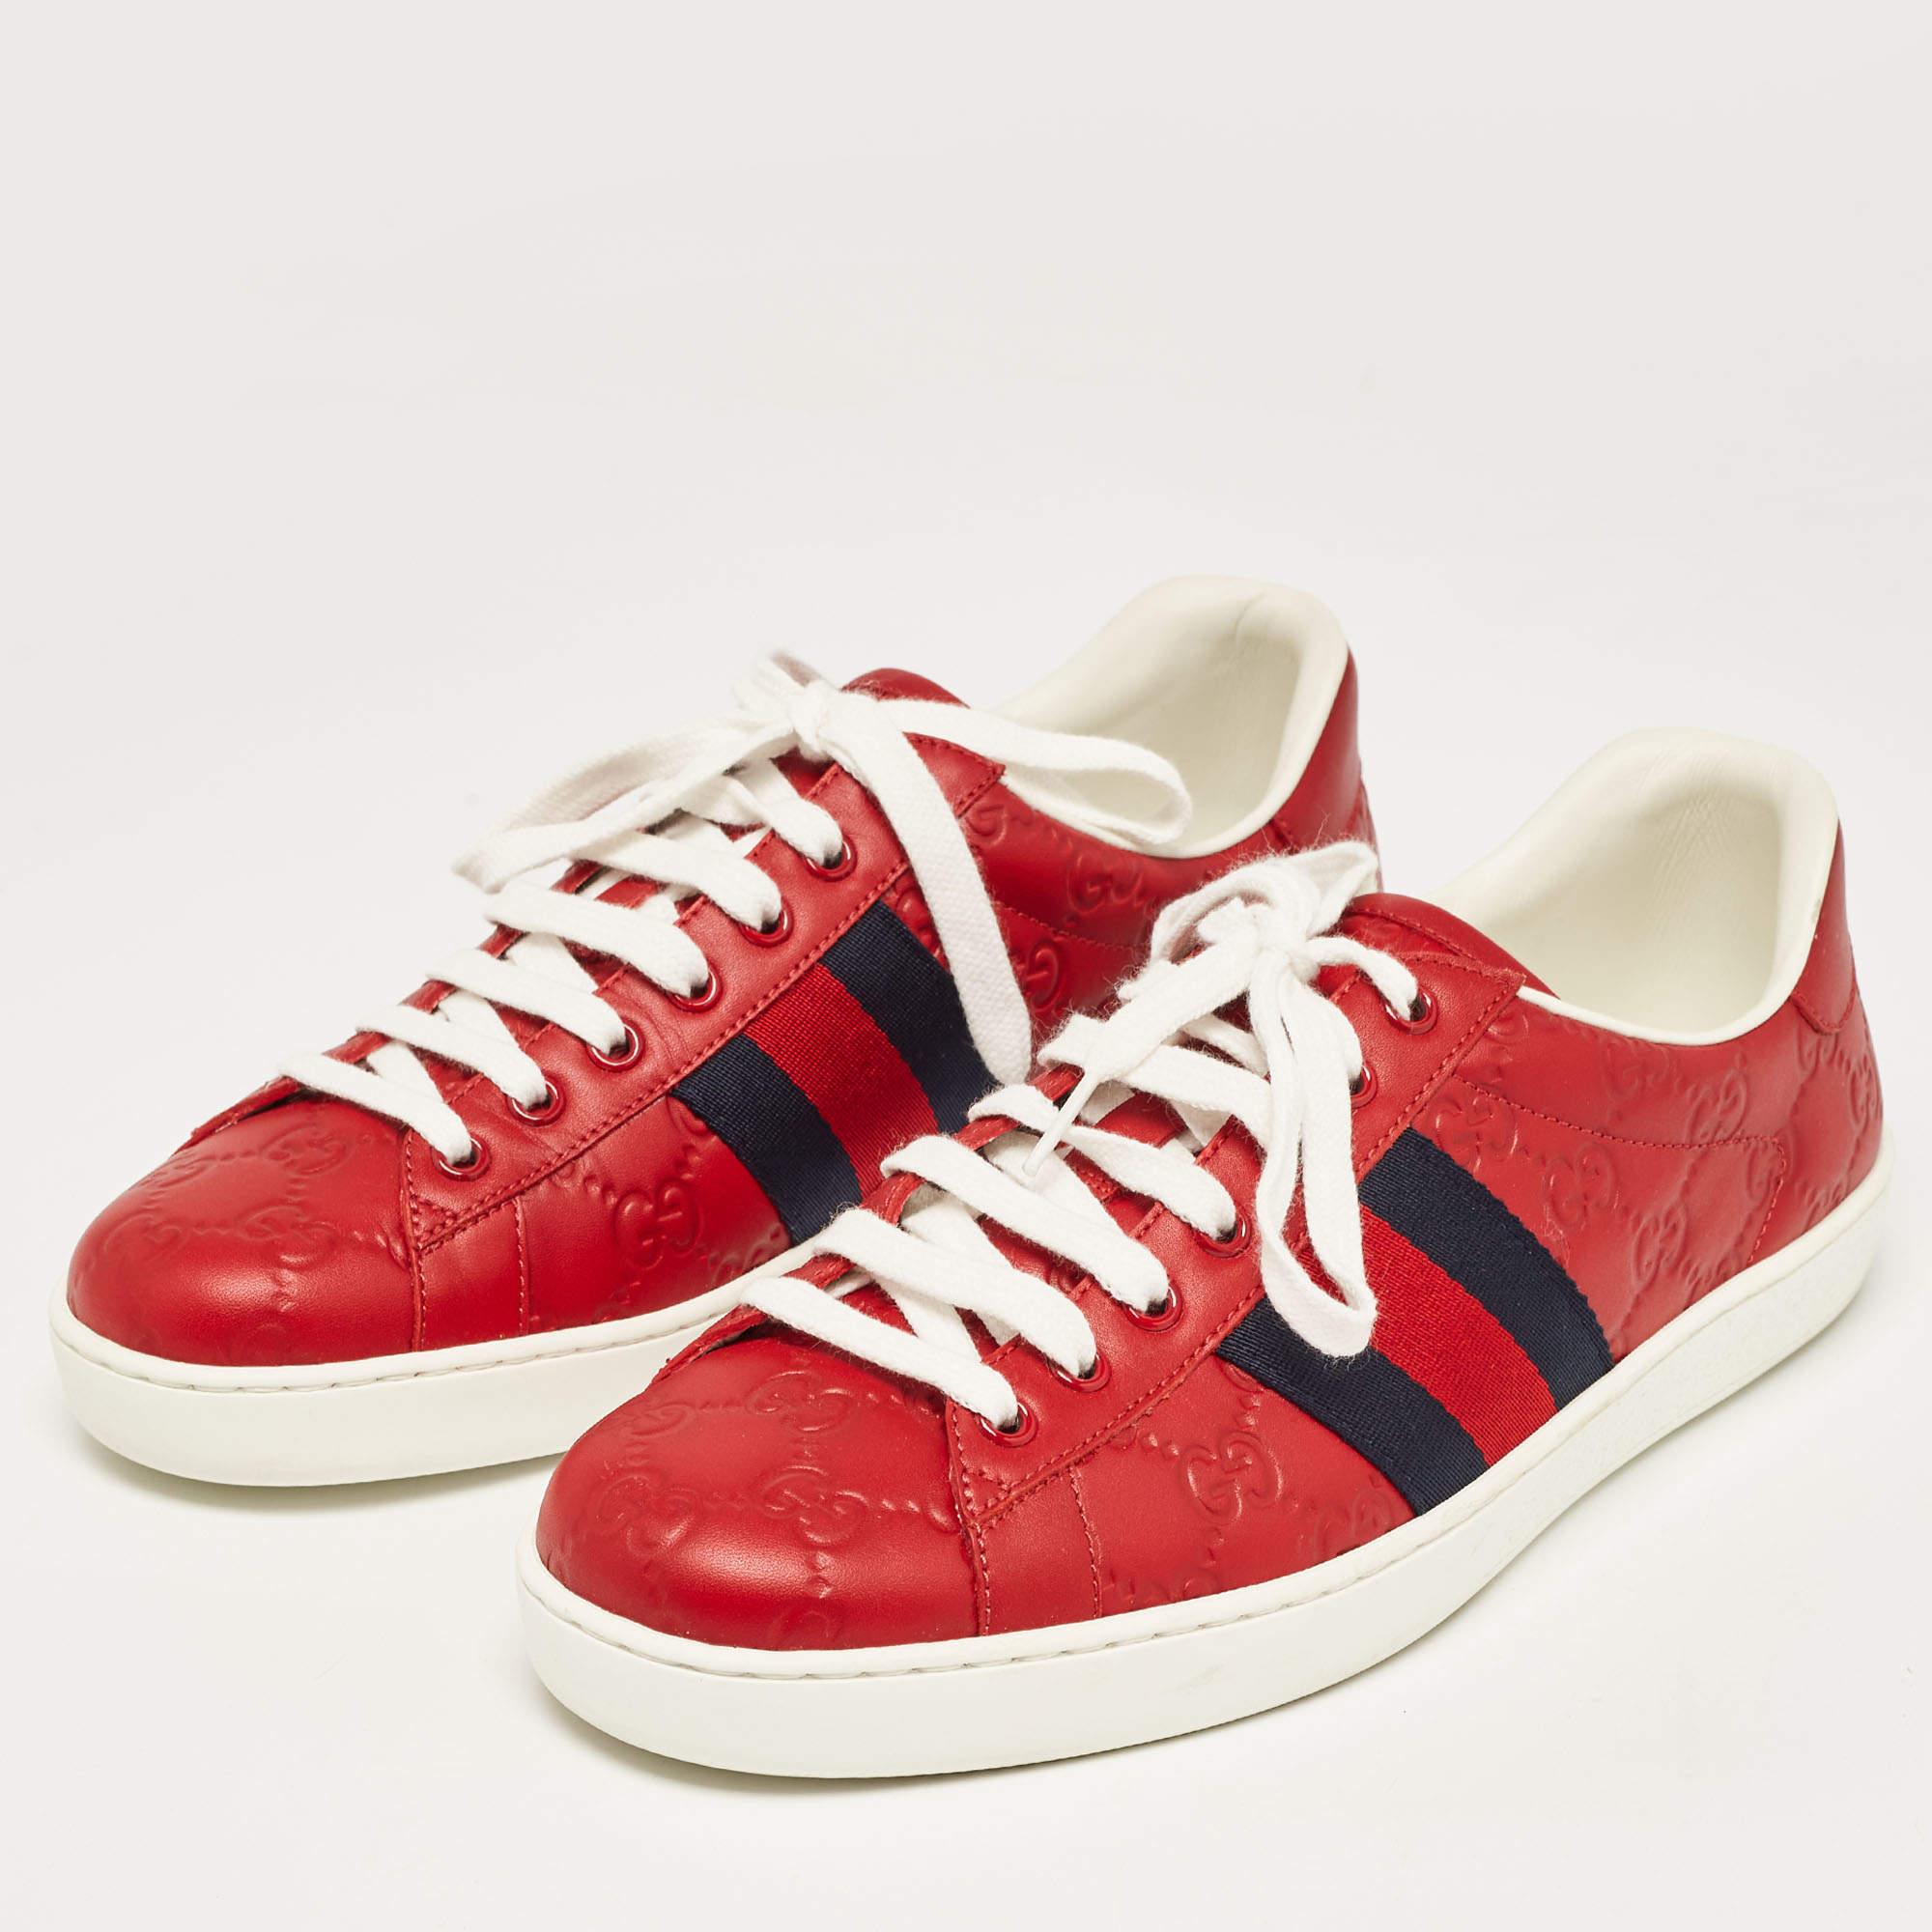 Gucci Red Guccissima Leather Ace Sneakers Size 41.5 In Excellent Condition For Sale In Dubai, Al Qouz 2